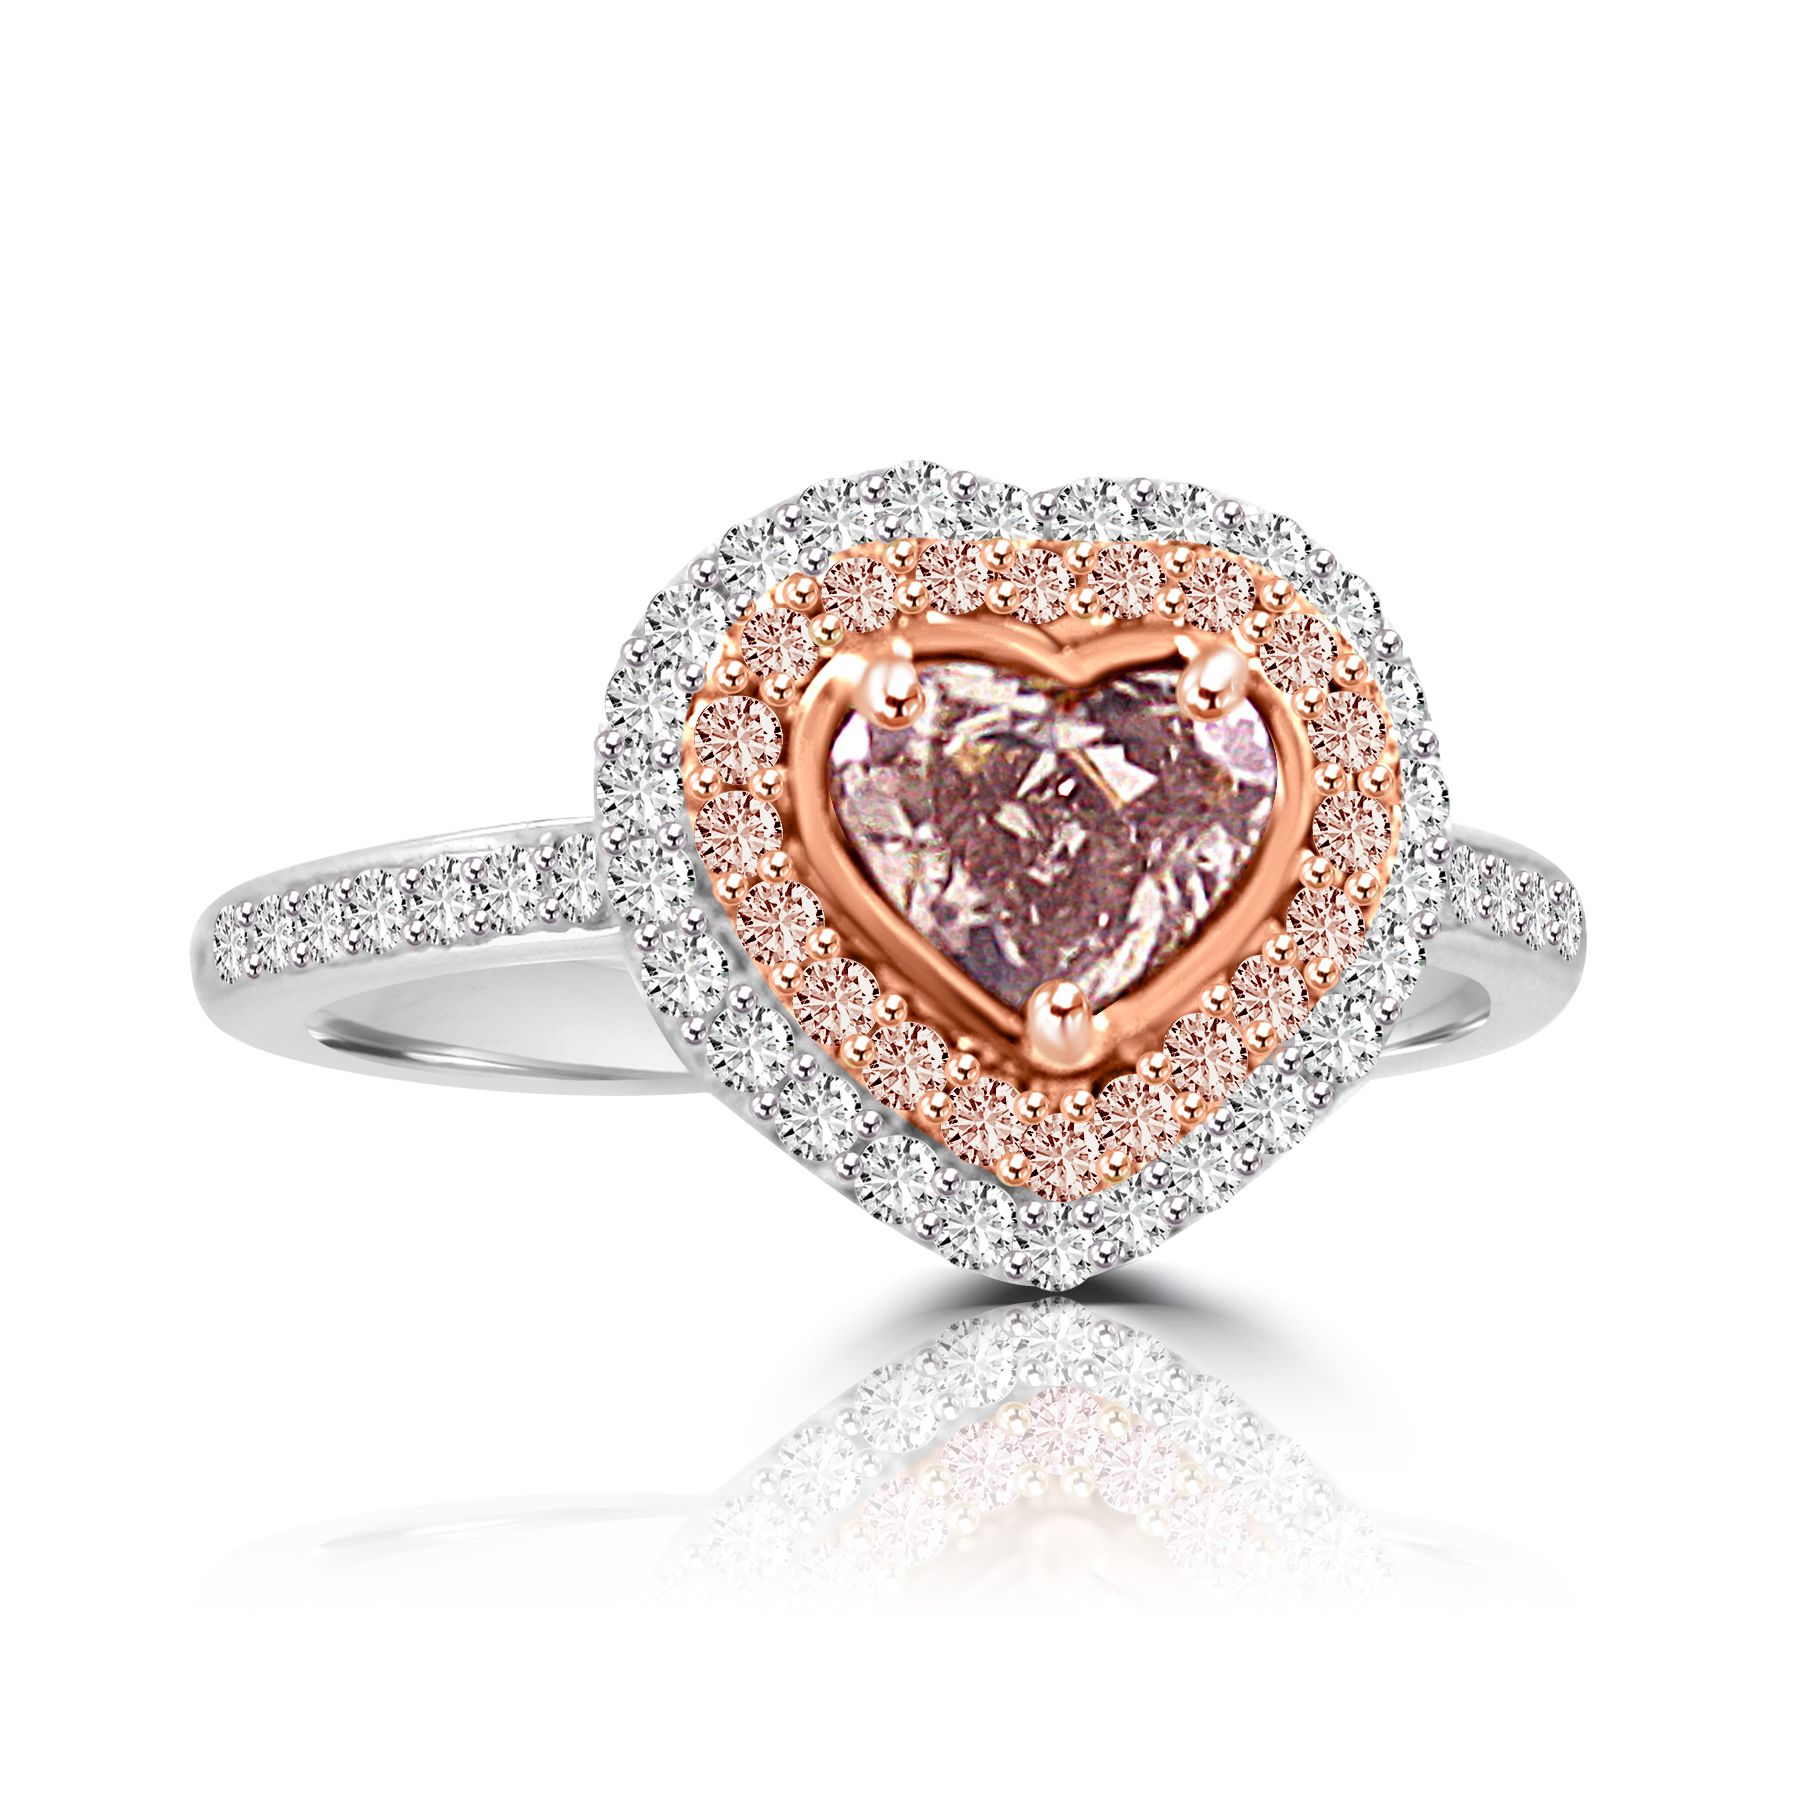 Colorstar Fancy Pink Diamond Ring